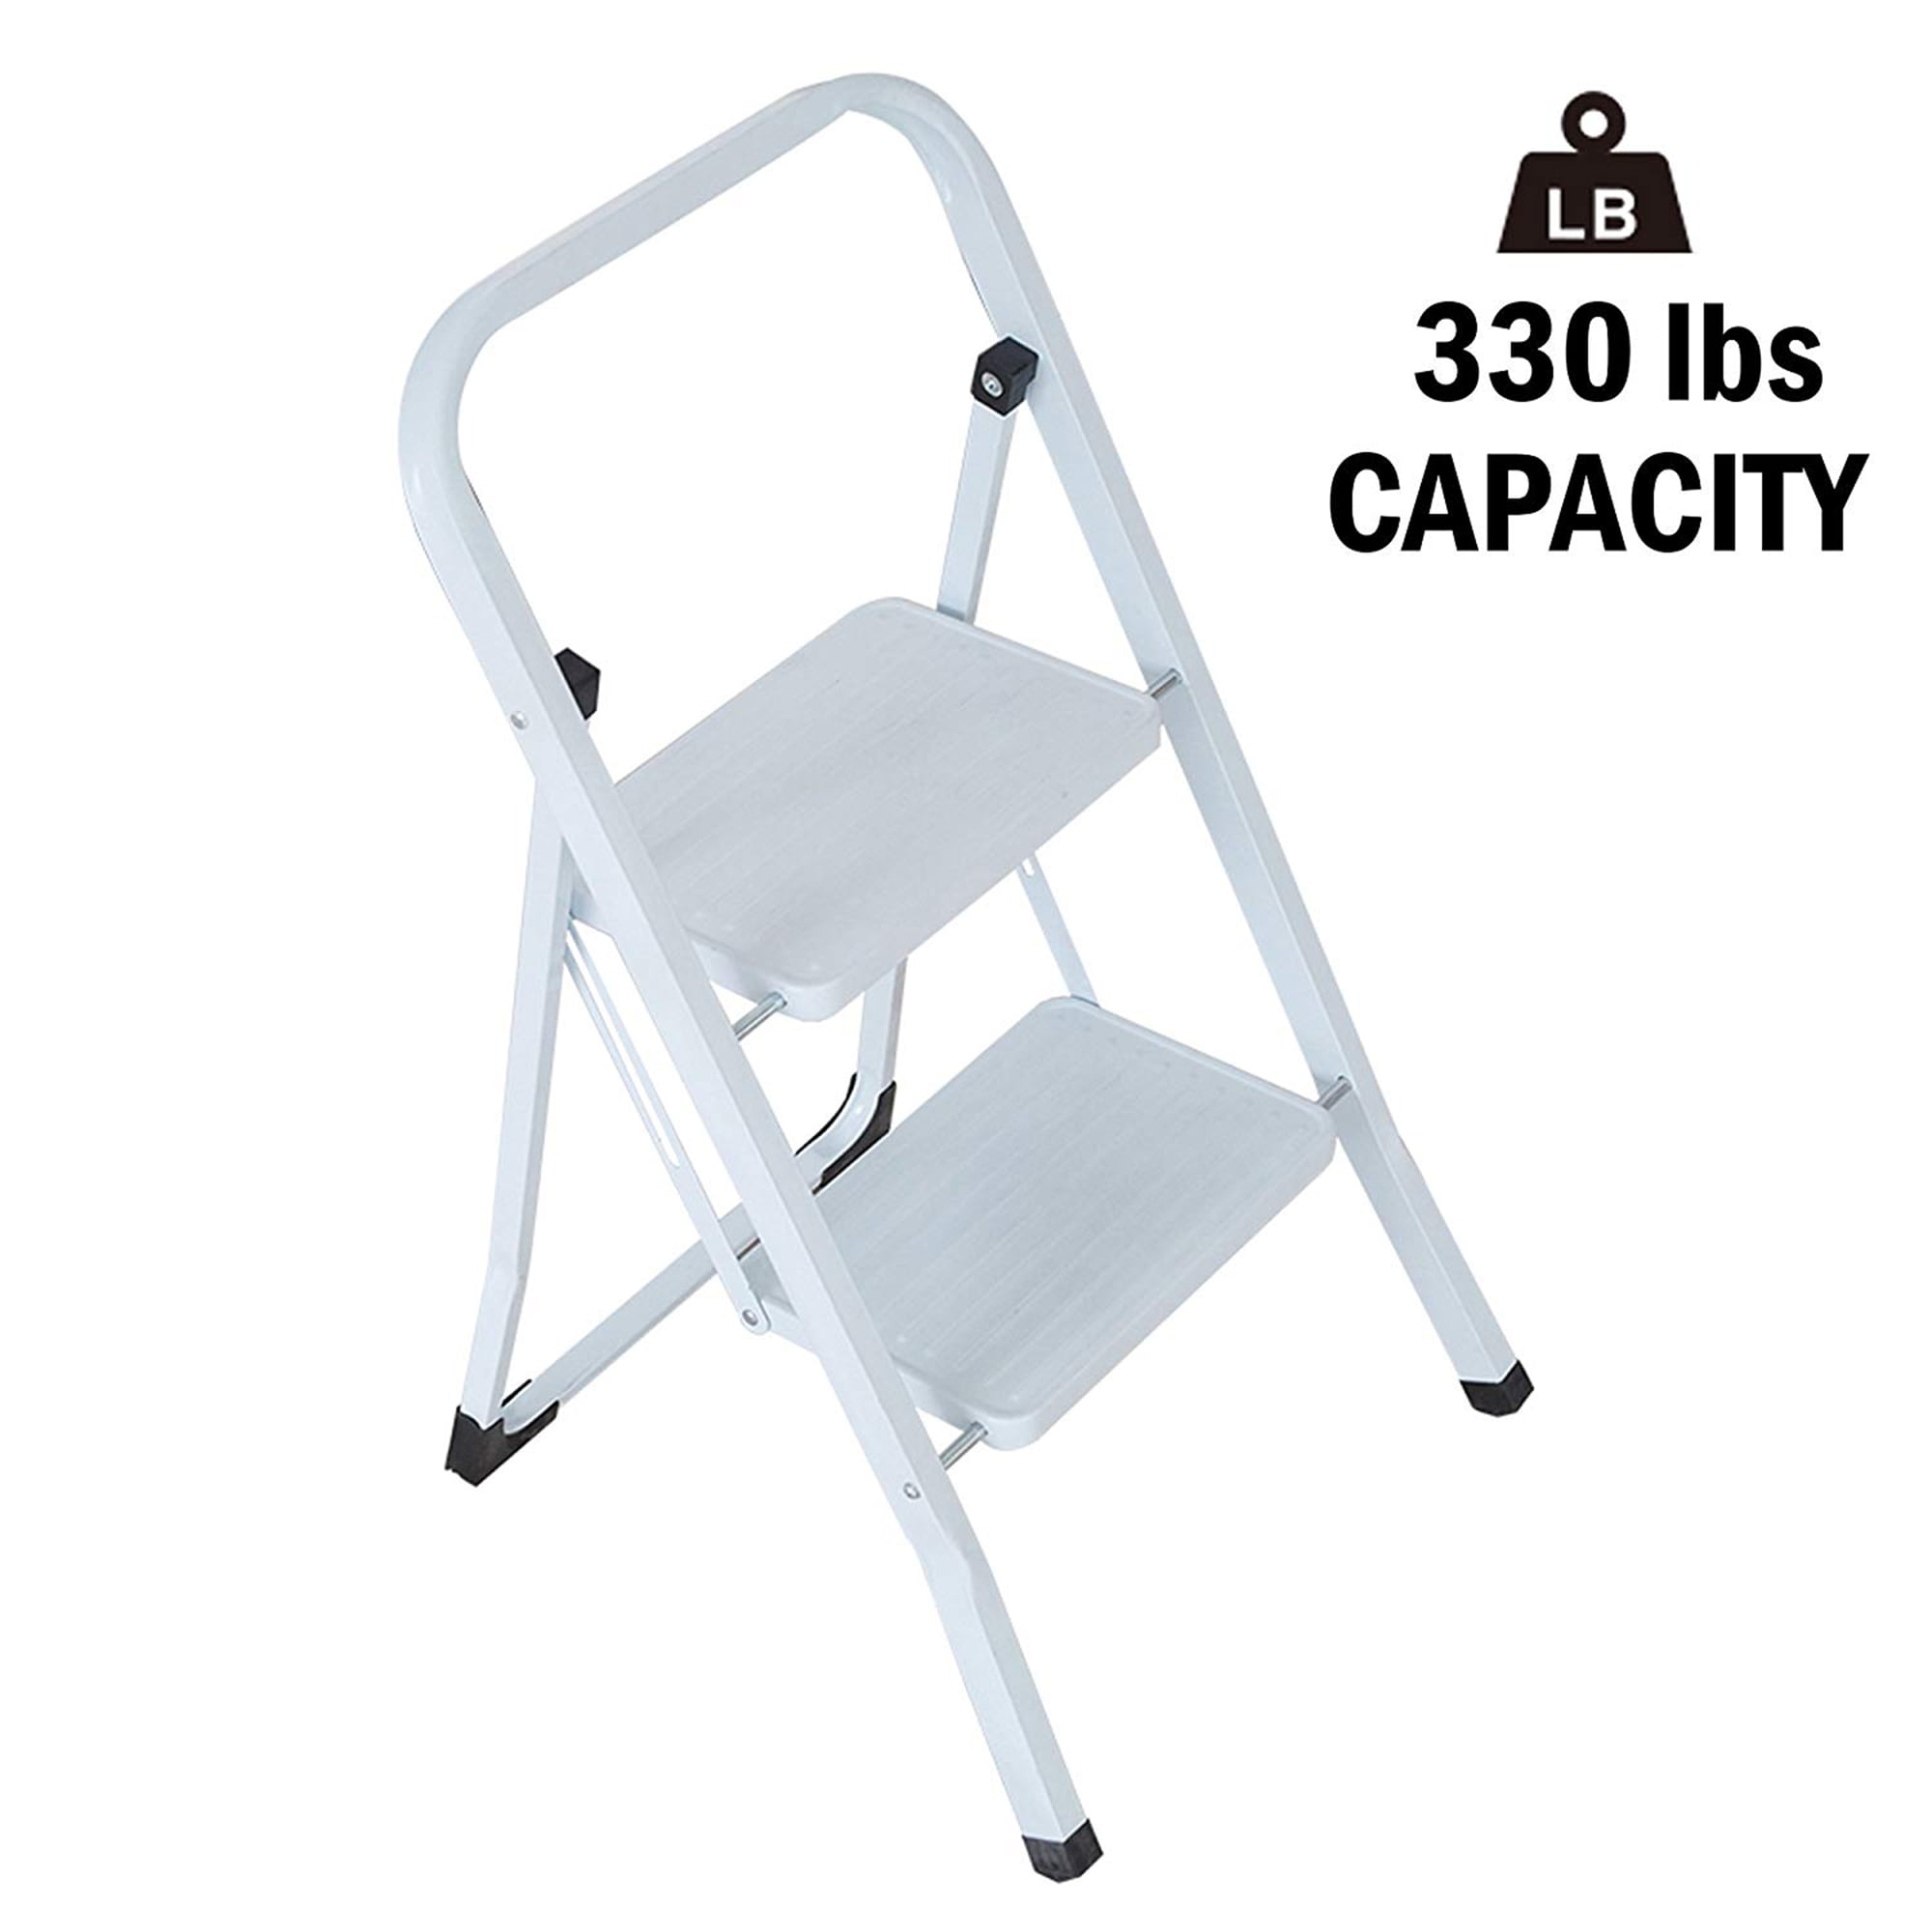 ❥2 Step Ladder Folding Step Stool Steel Ladder Sturdy And Wide Pedal Mini-Stool 